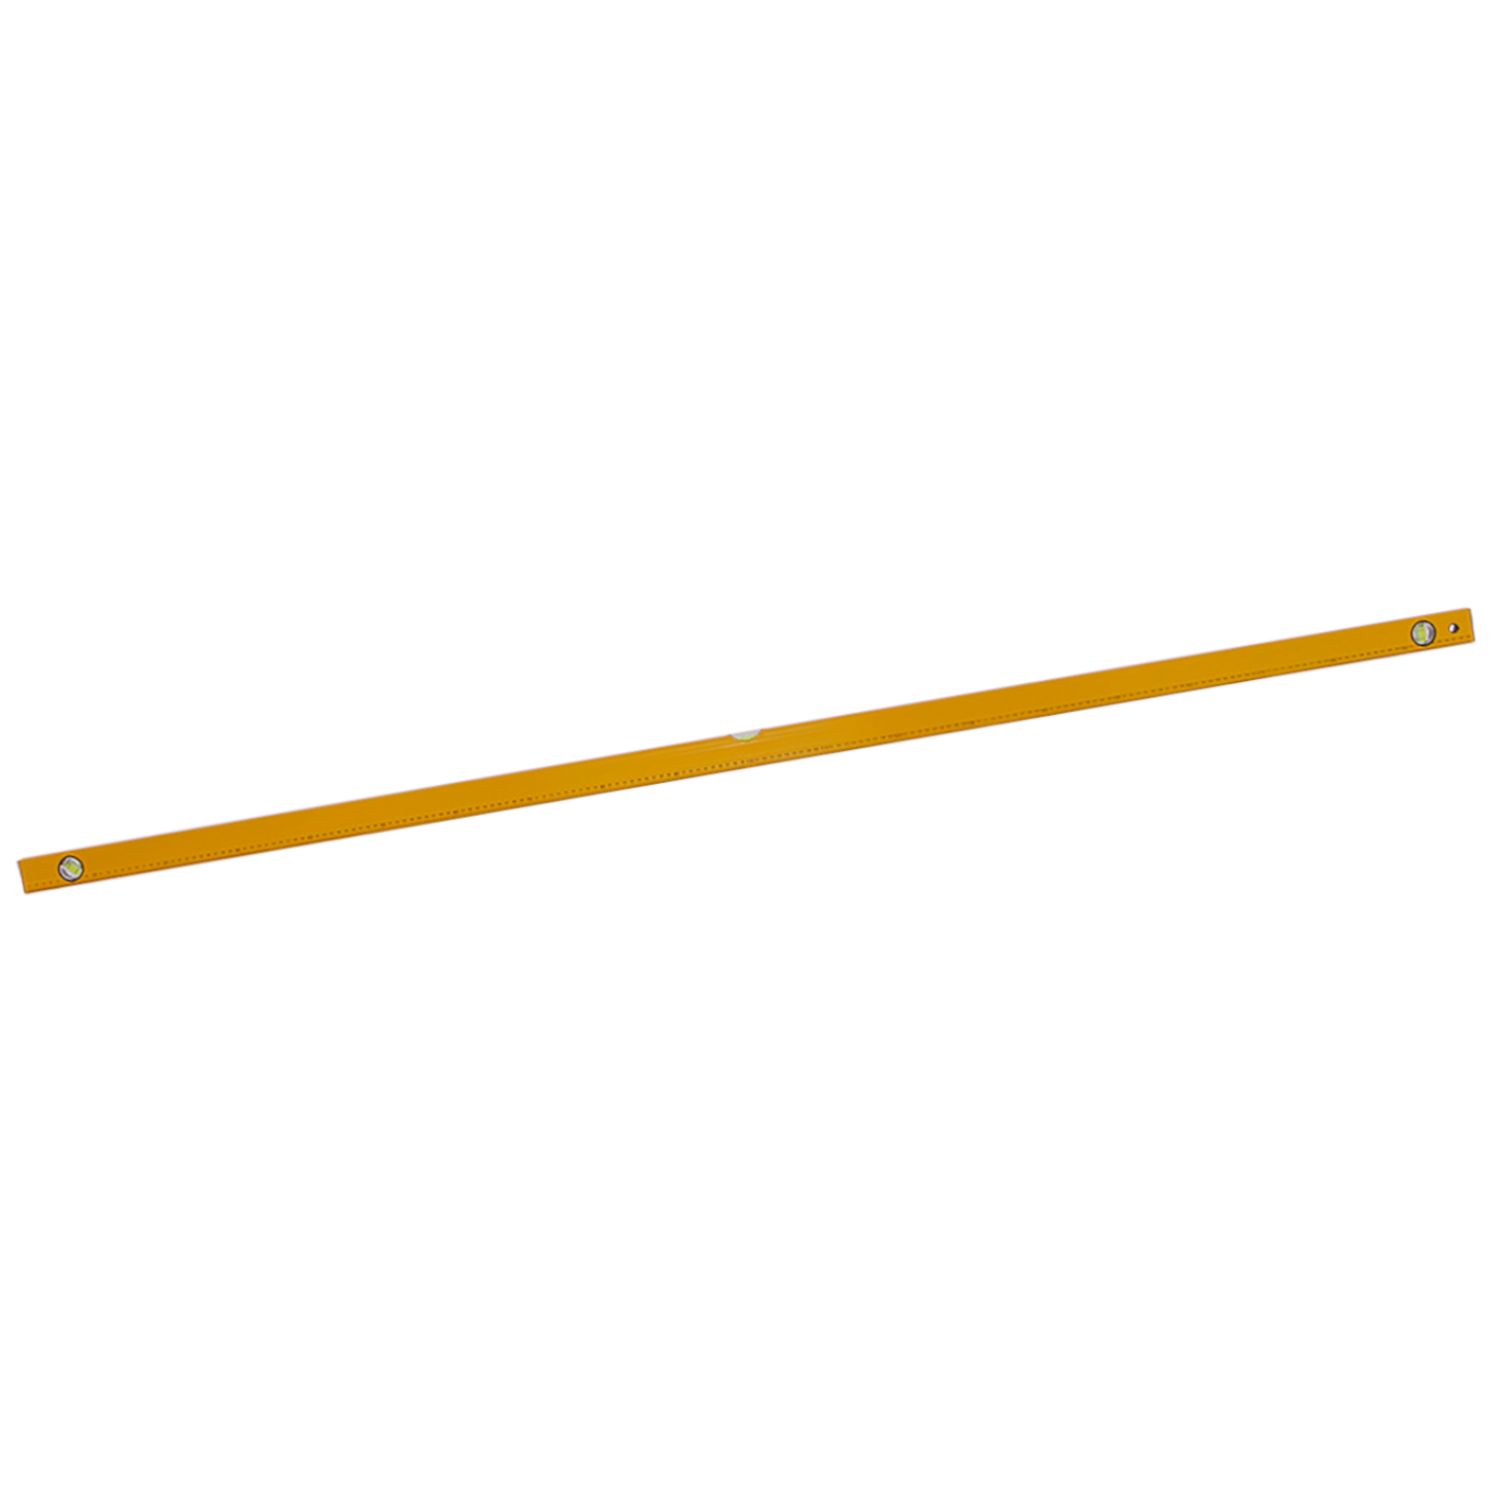 LEVIOR 15970 Vodováha žlutá, délka 200cm, 3 libely